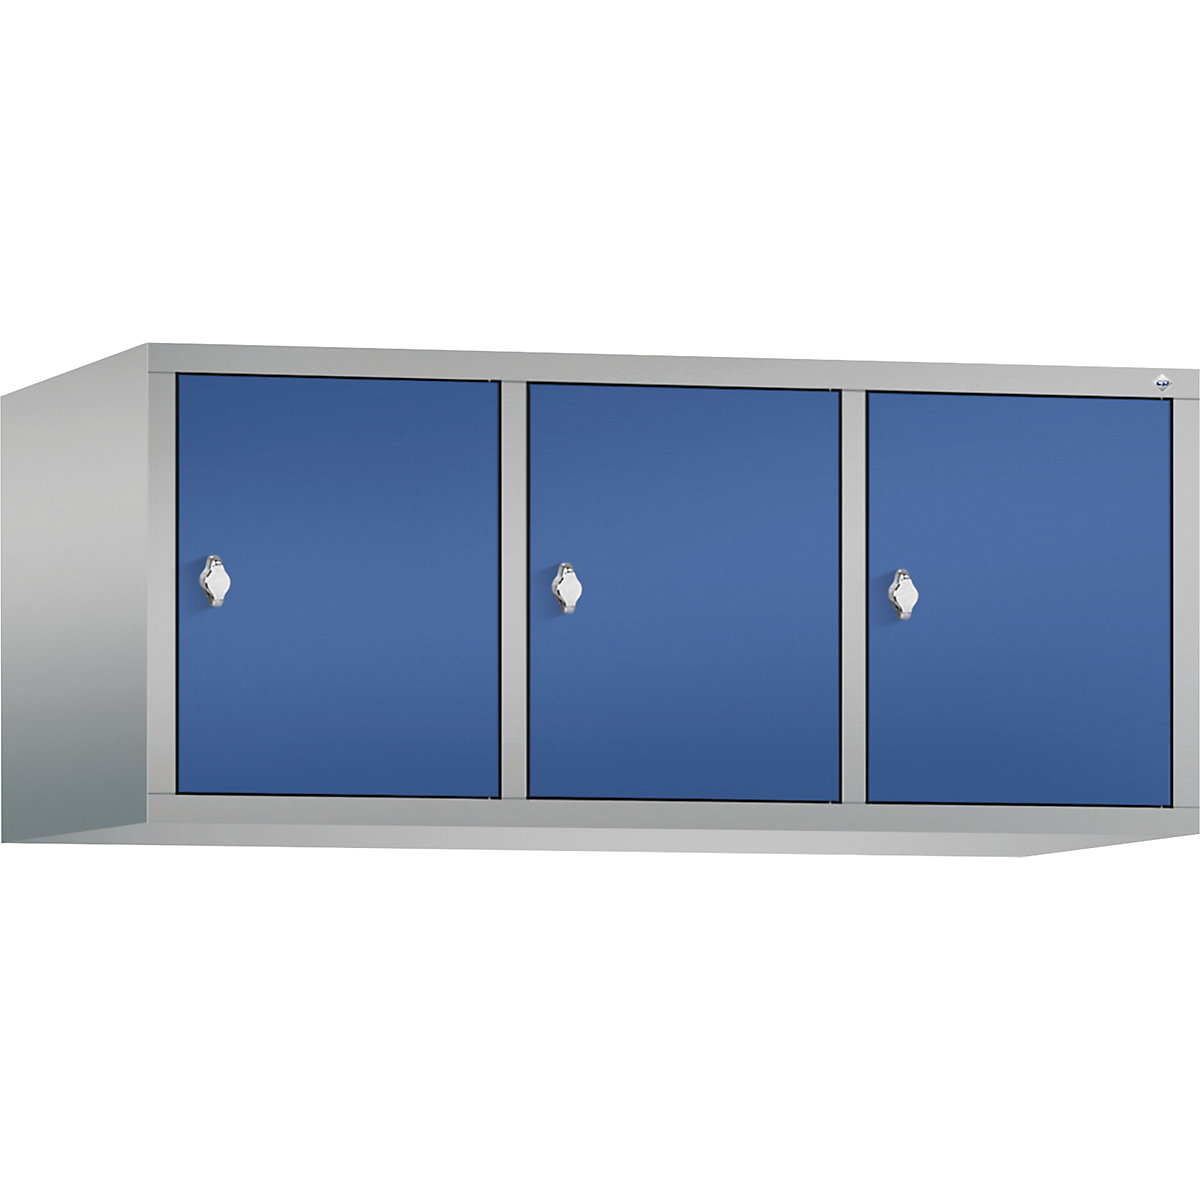 C+P – Altillo CLASSIC, 3 compartimentos, anchura de compartimento 400 mm, aluminio blanco / azul genciana